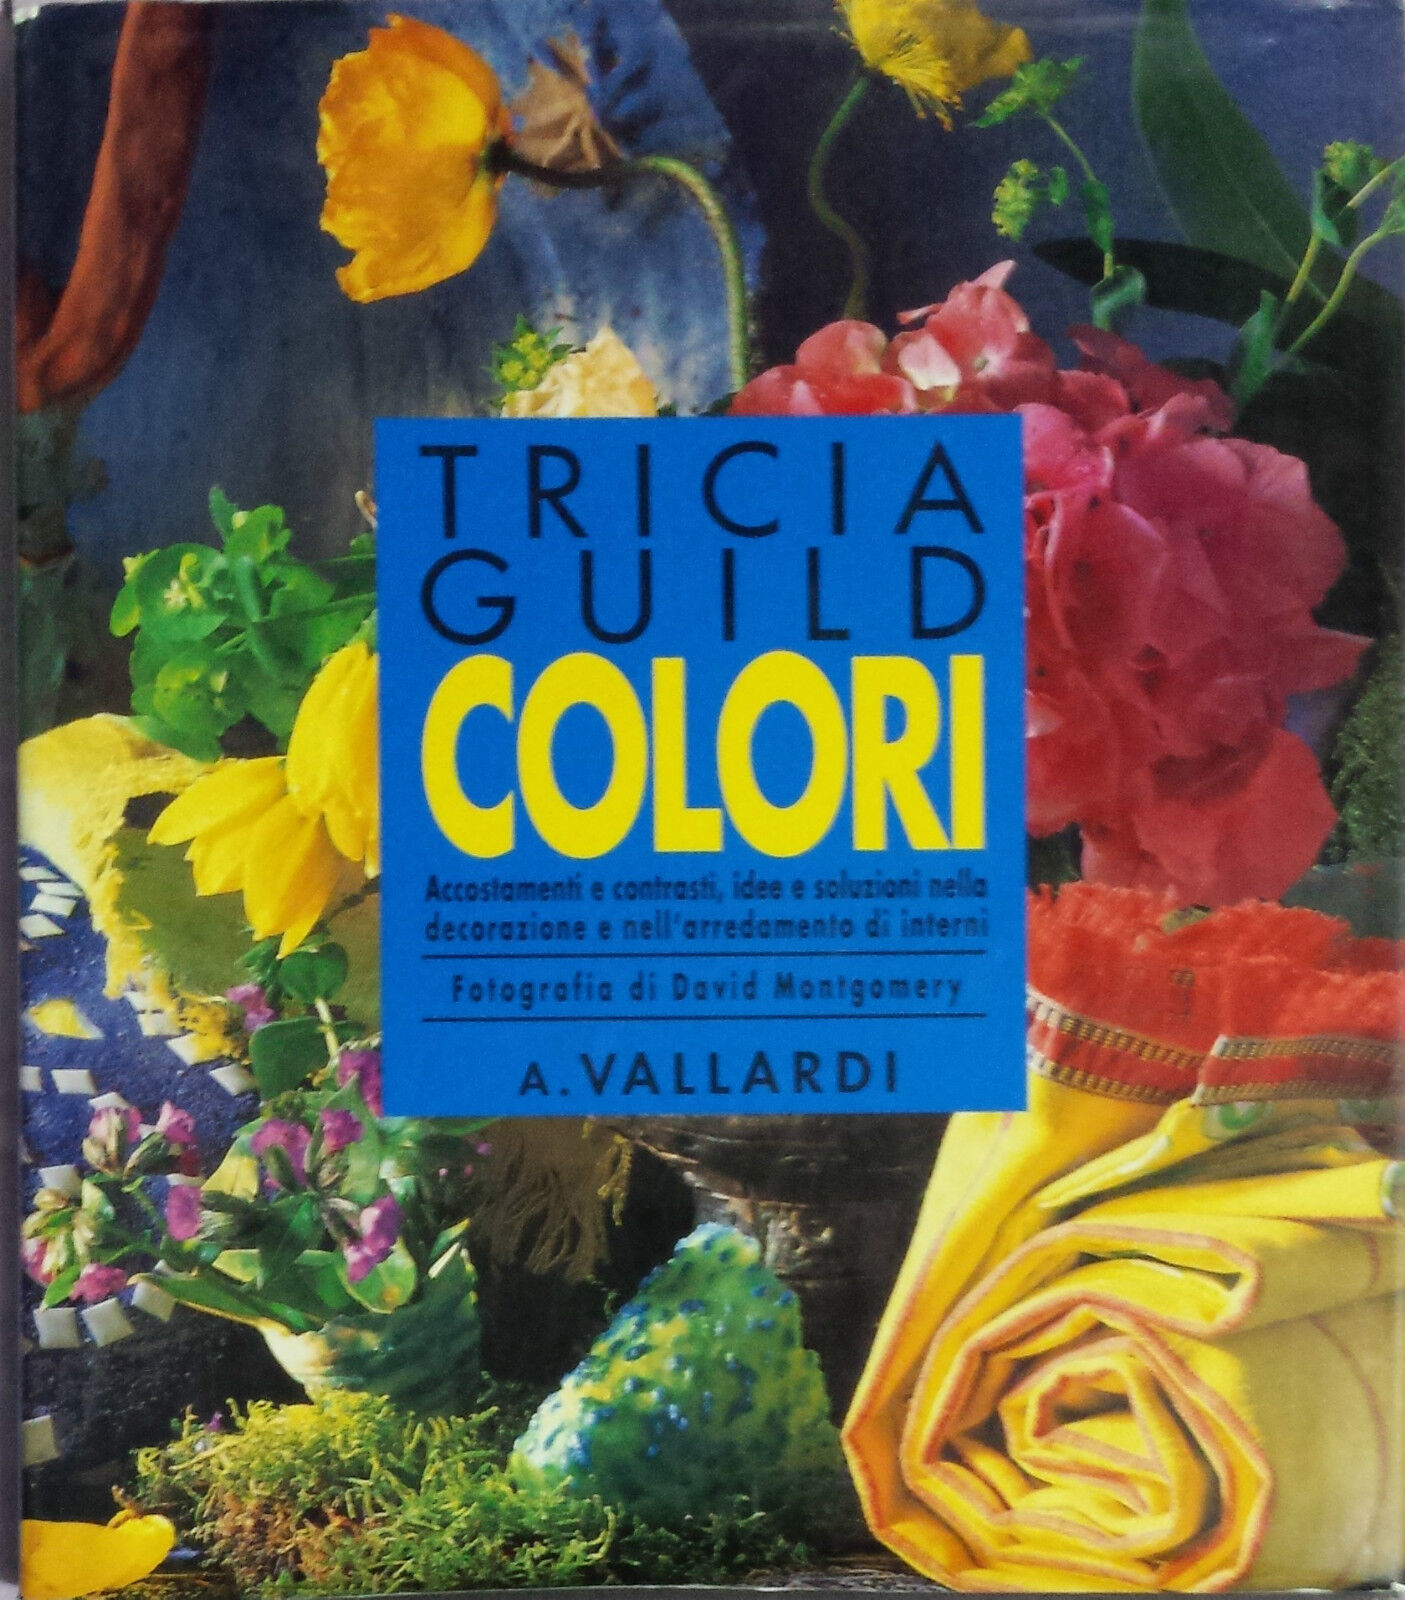 Colori - Guild Tricia - A. Vallardi - 1992 - G